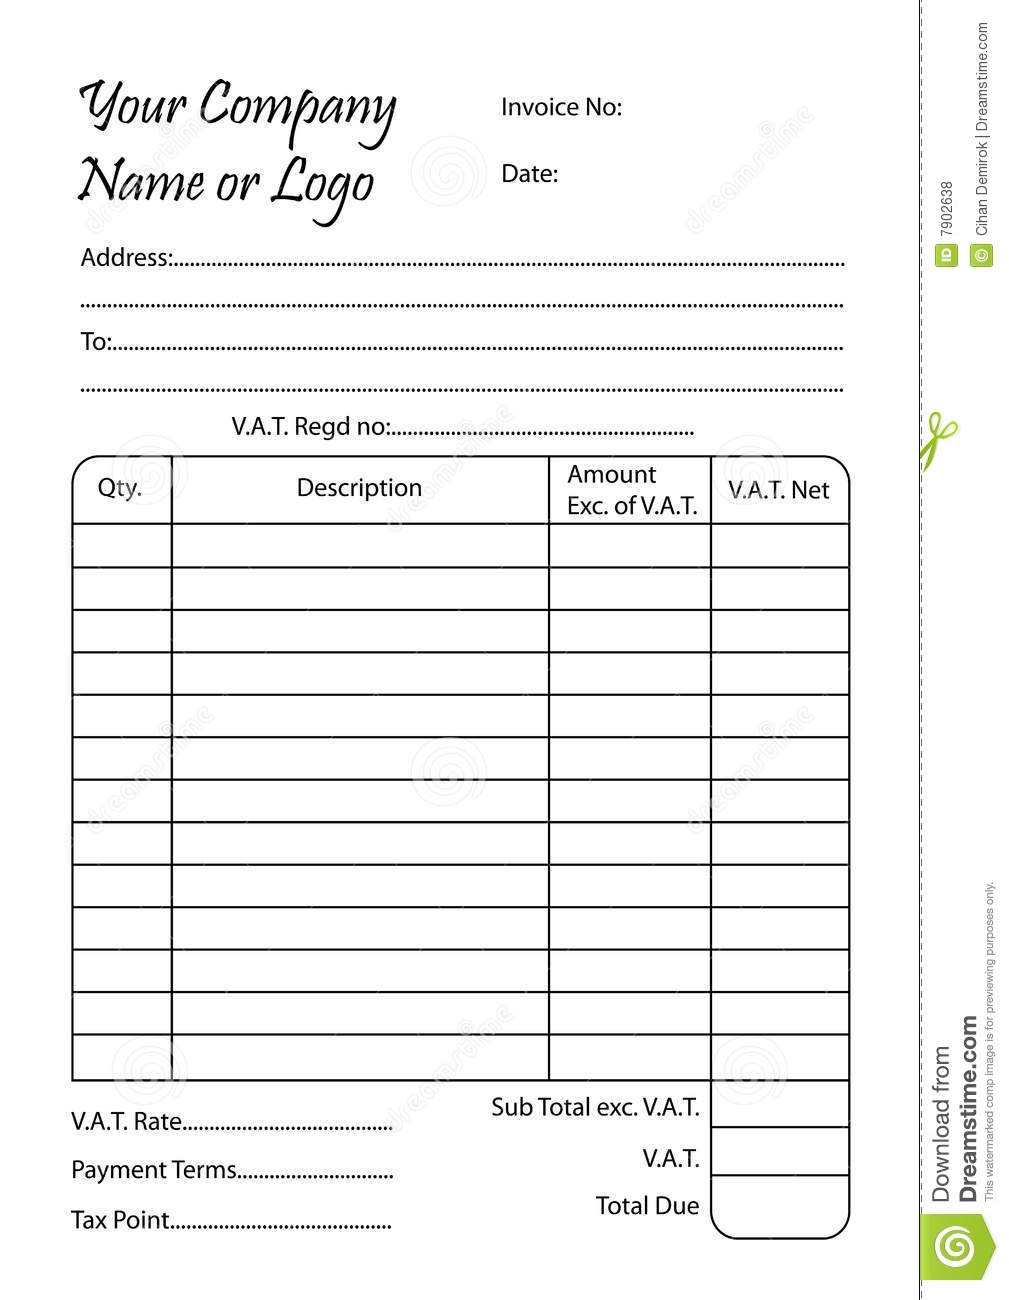 invoice book template invoice book template royalty free stock photos image 7902638 1009 X 1300